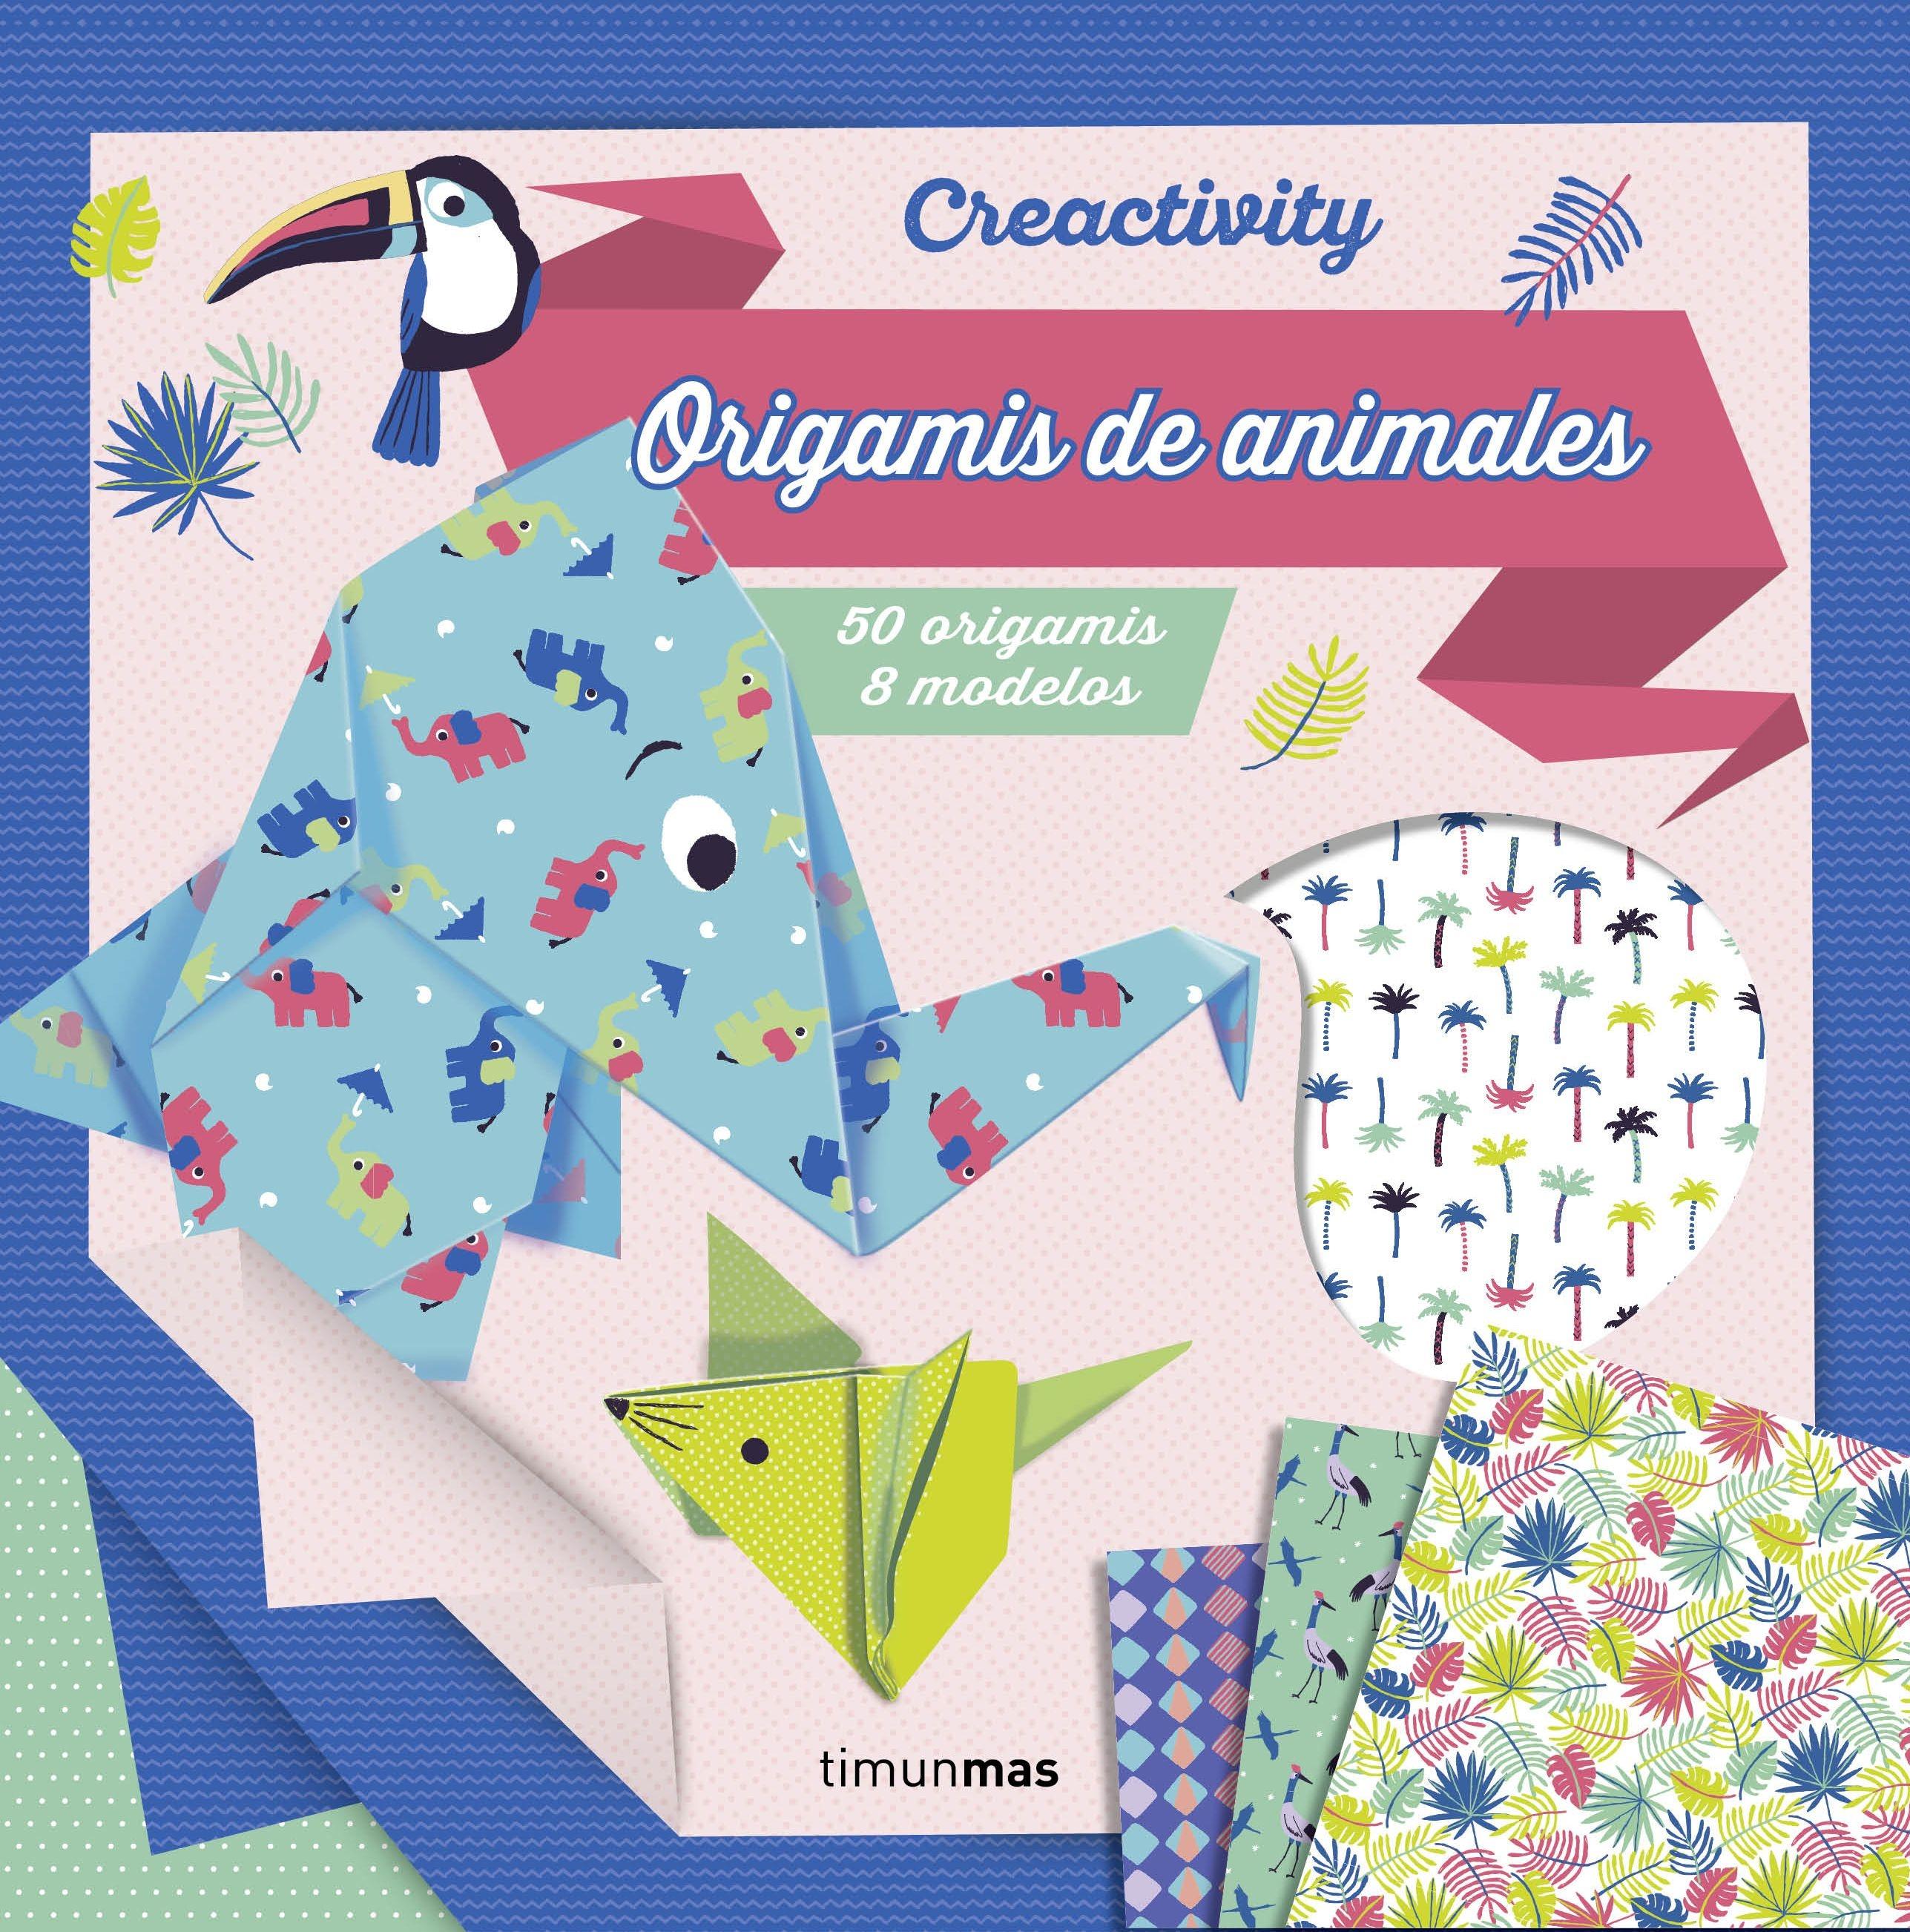 Creactivity. Origamis de animales. 